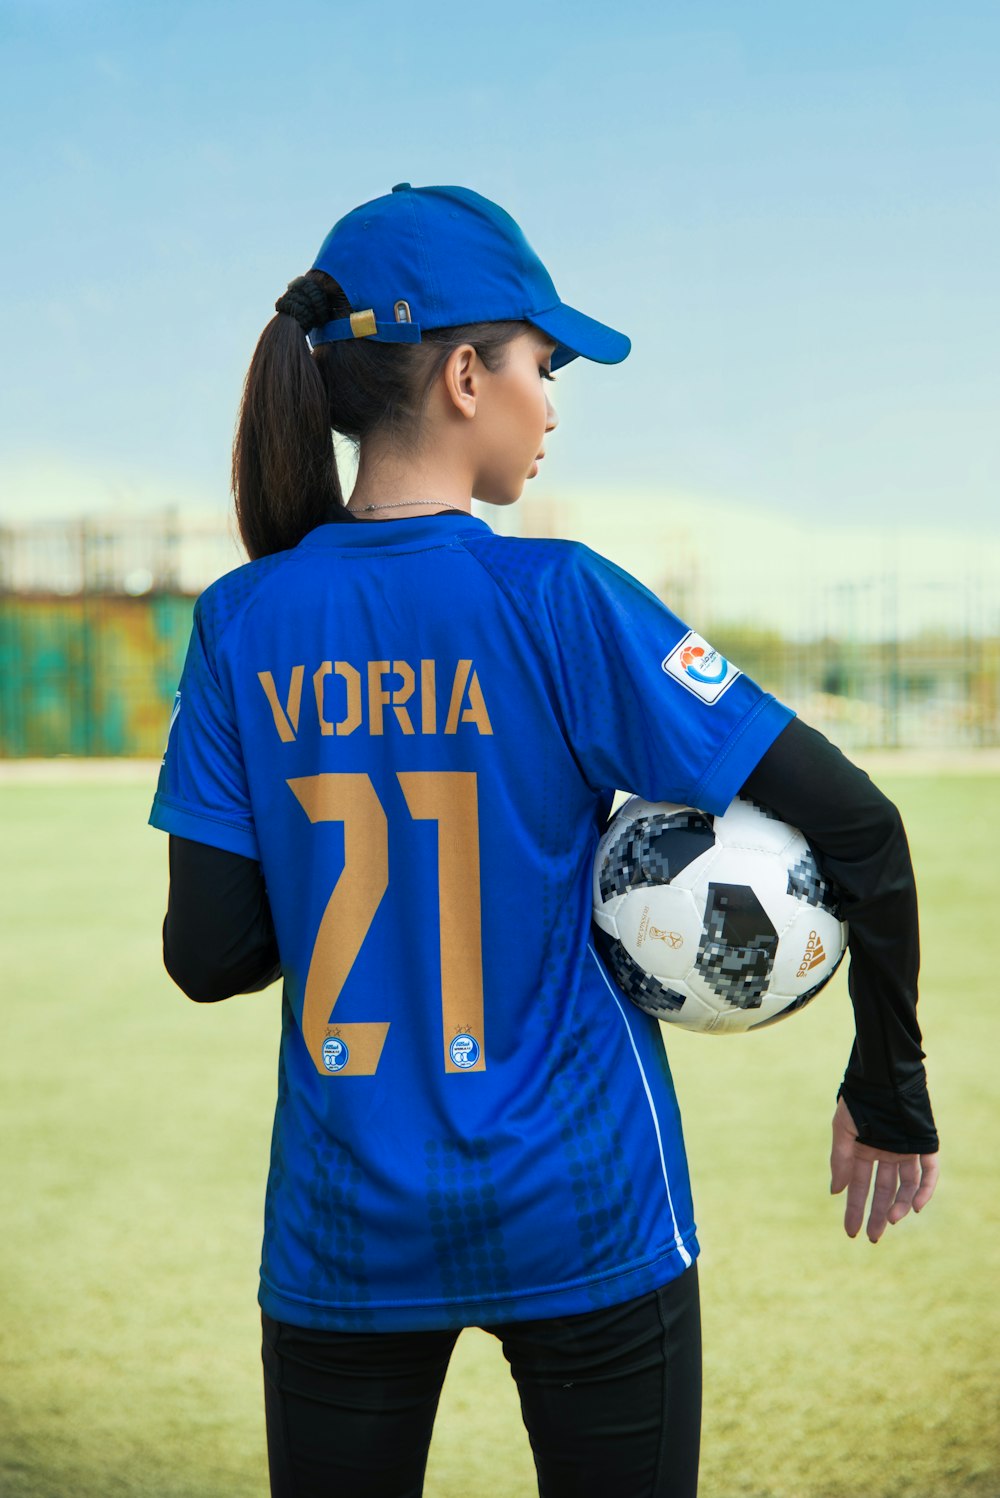 a woman in a blue uniform holding a soccer ball